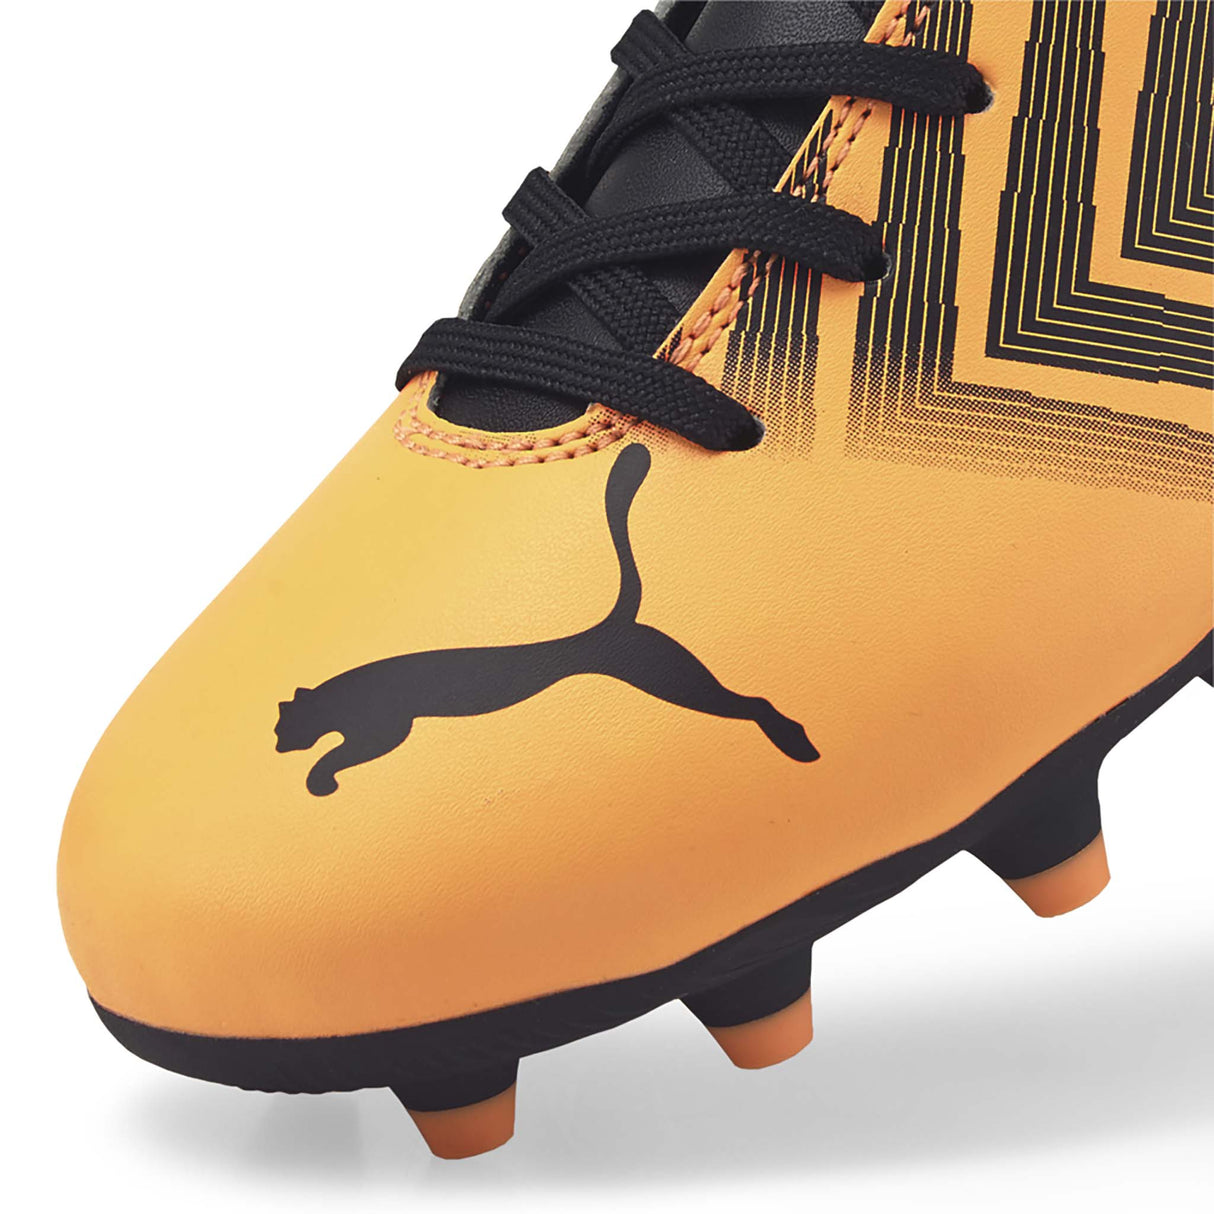 Puma Tacto II FG/AG Junior souliers soccer crampons orange noir enfant pointe